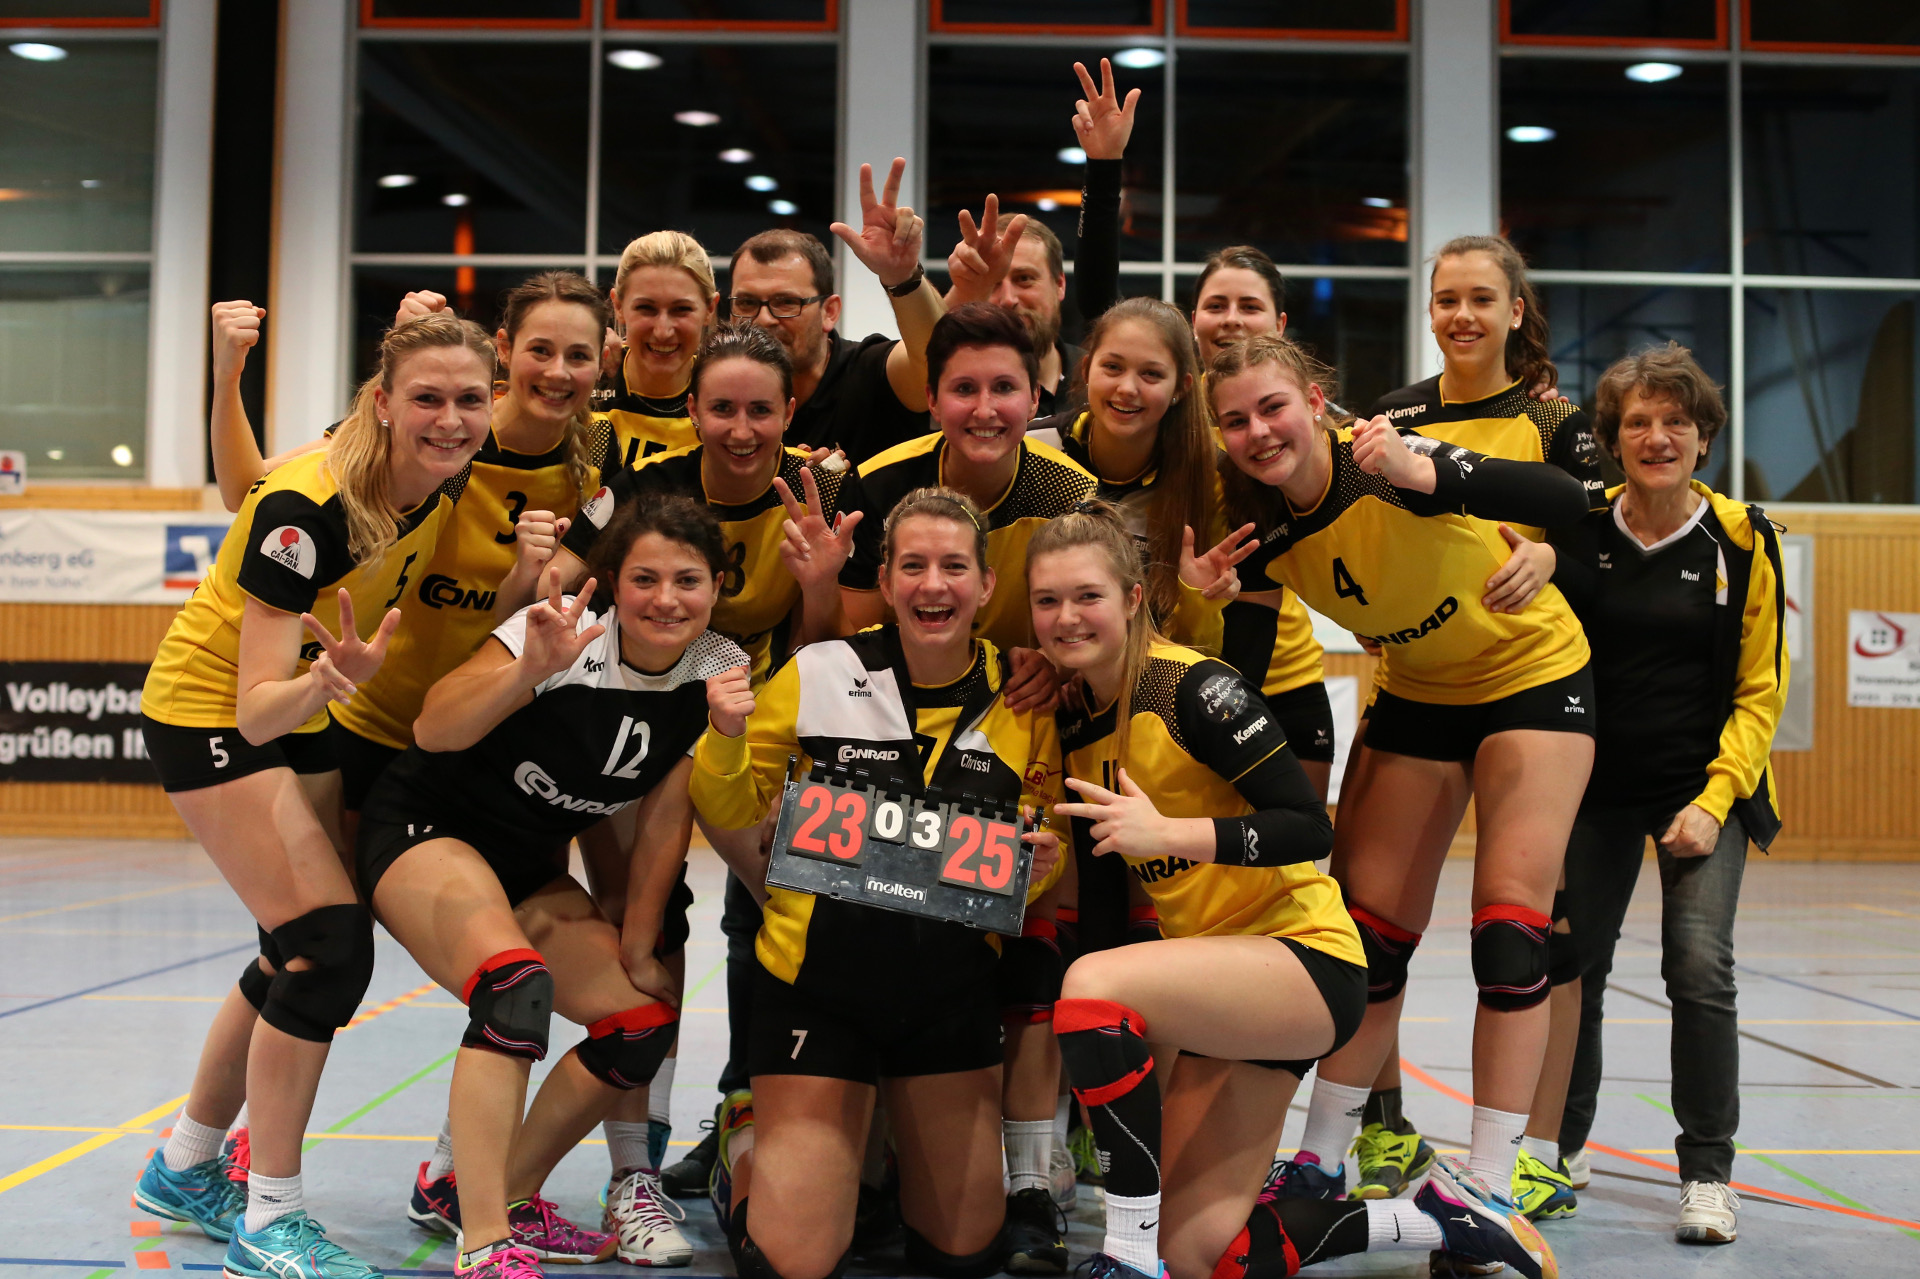 We congratulate the women’s volleyball team